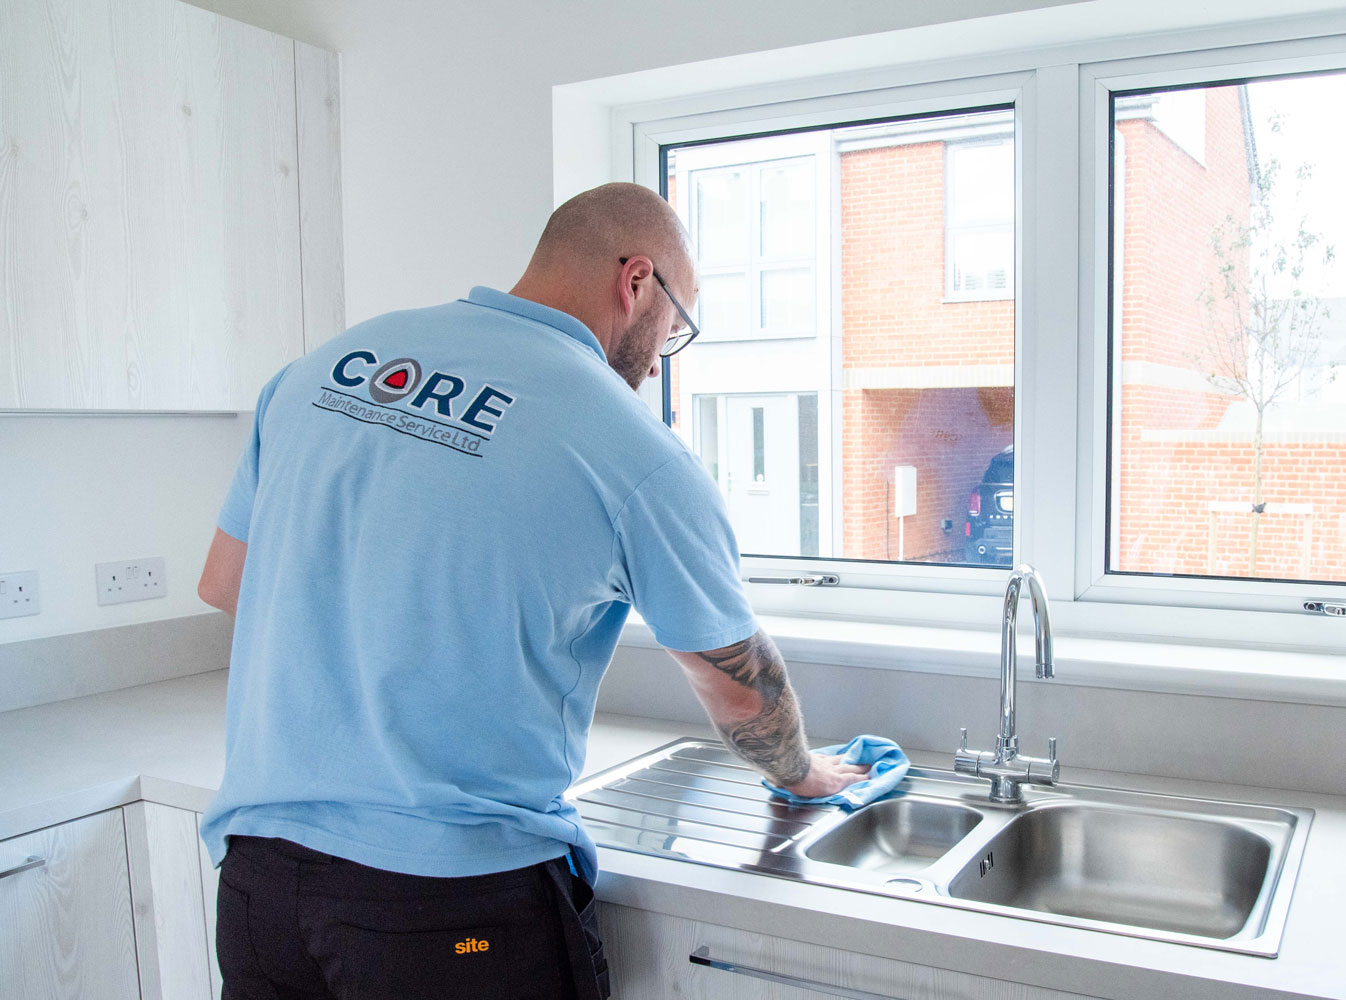 Man wearing pale blue shirt with Core logo polishing sink.